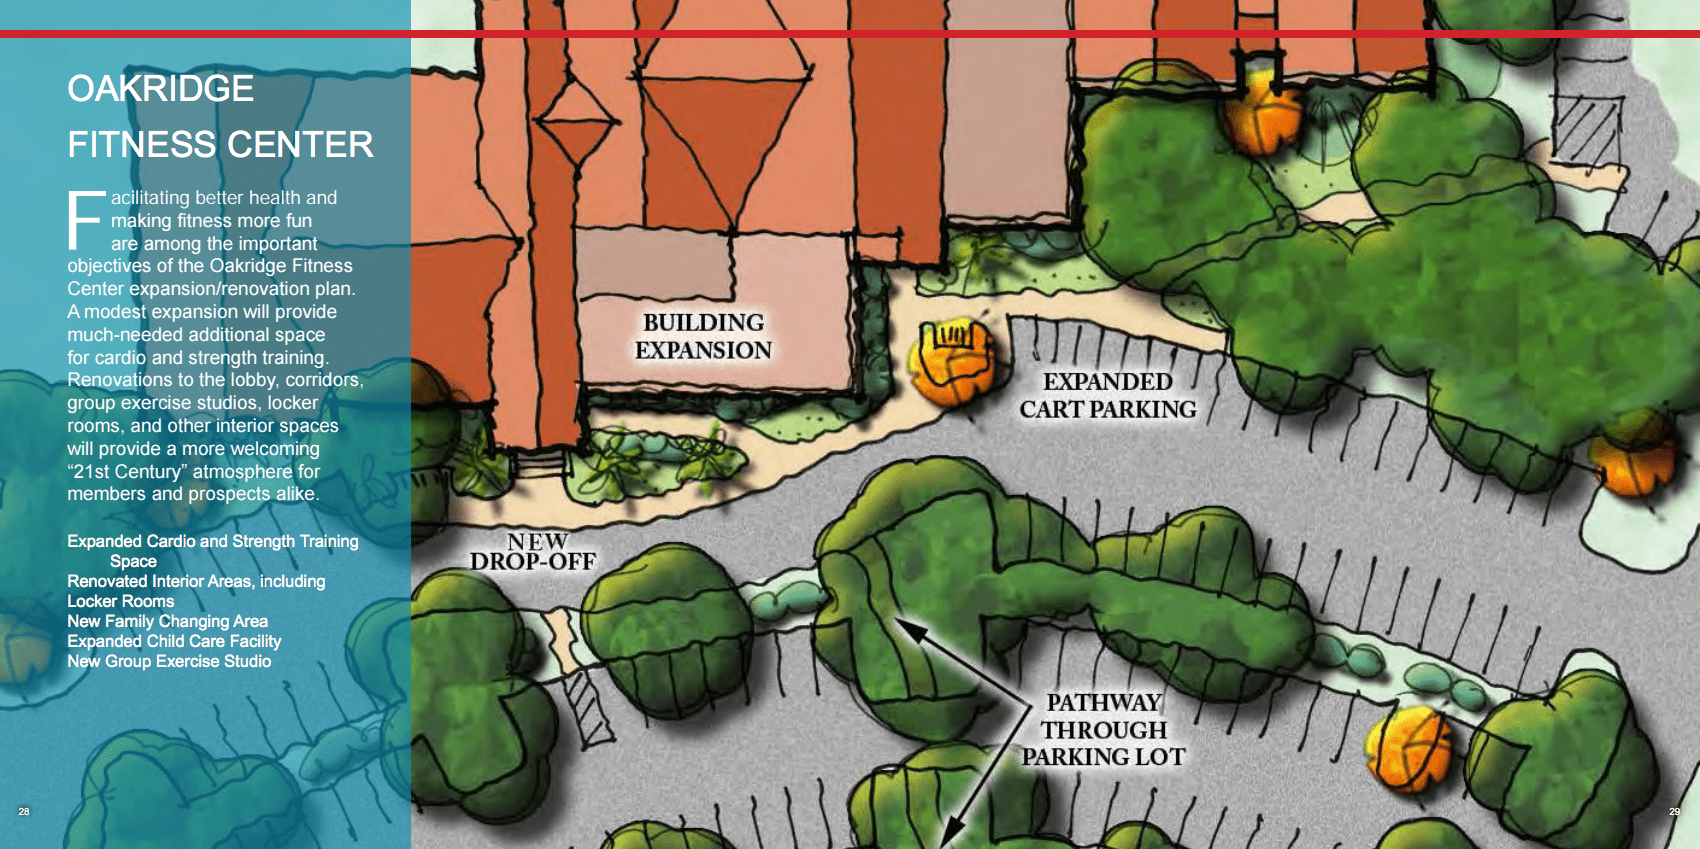 Map rendering of the Oakridge fitness center improvements.